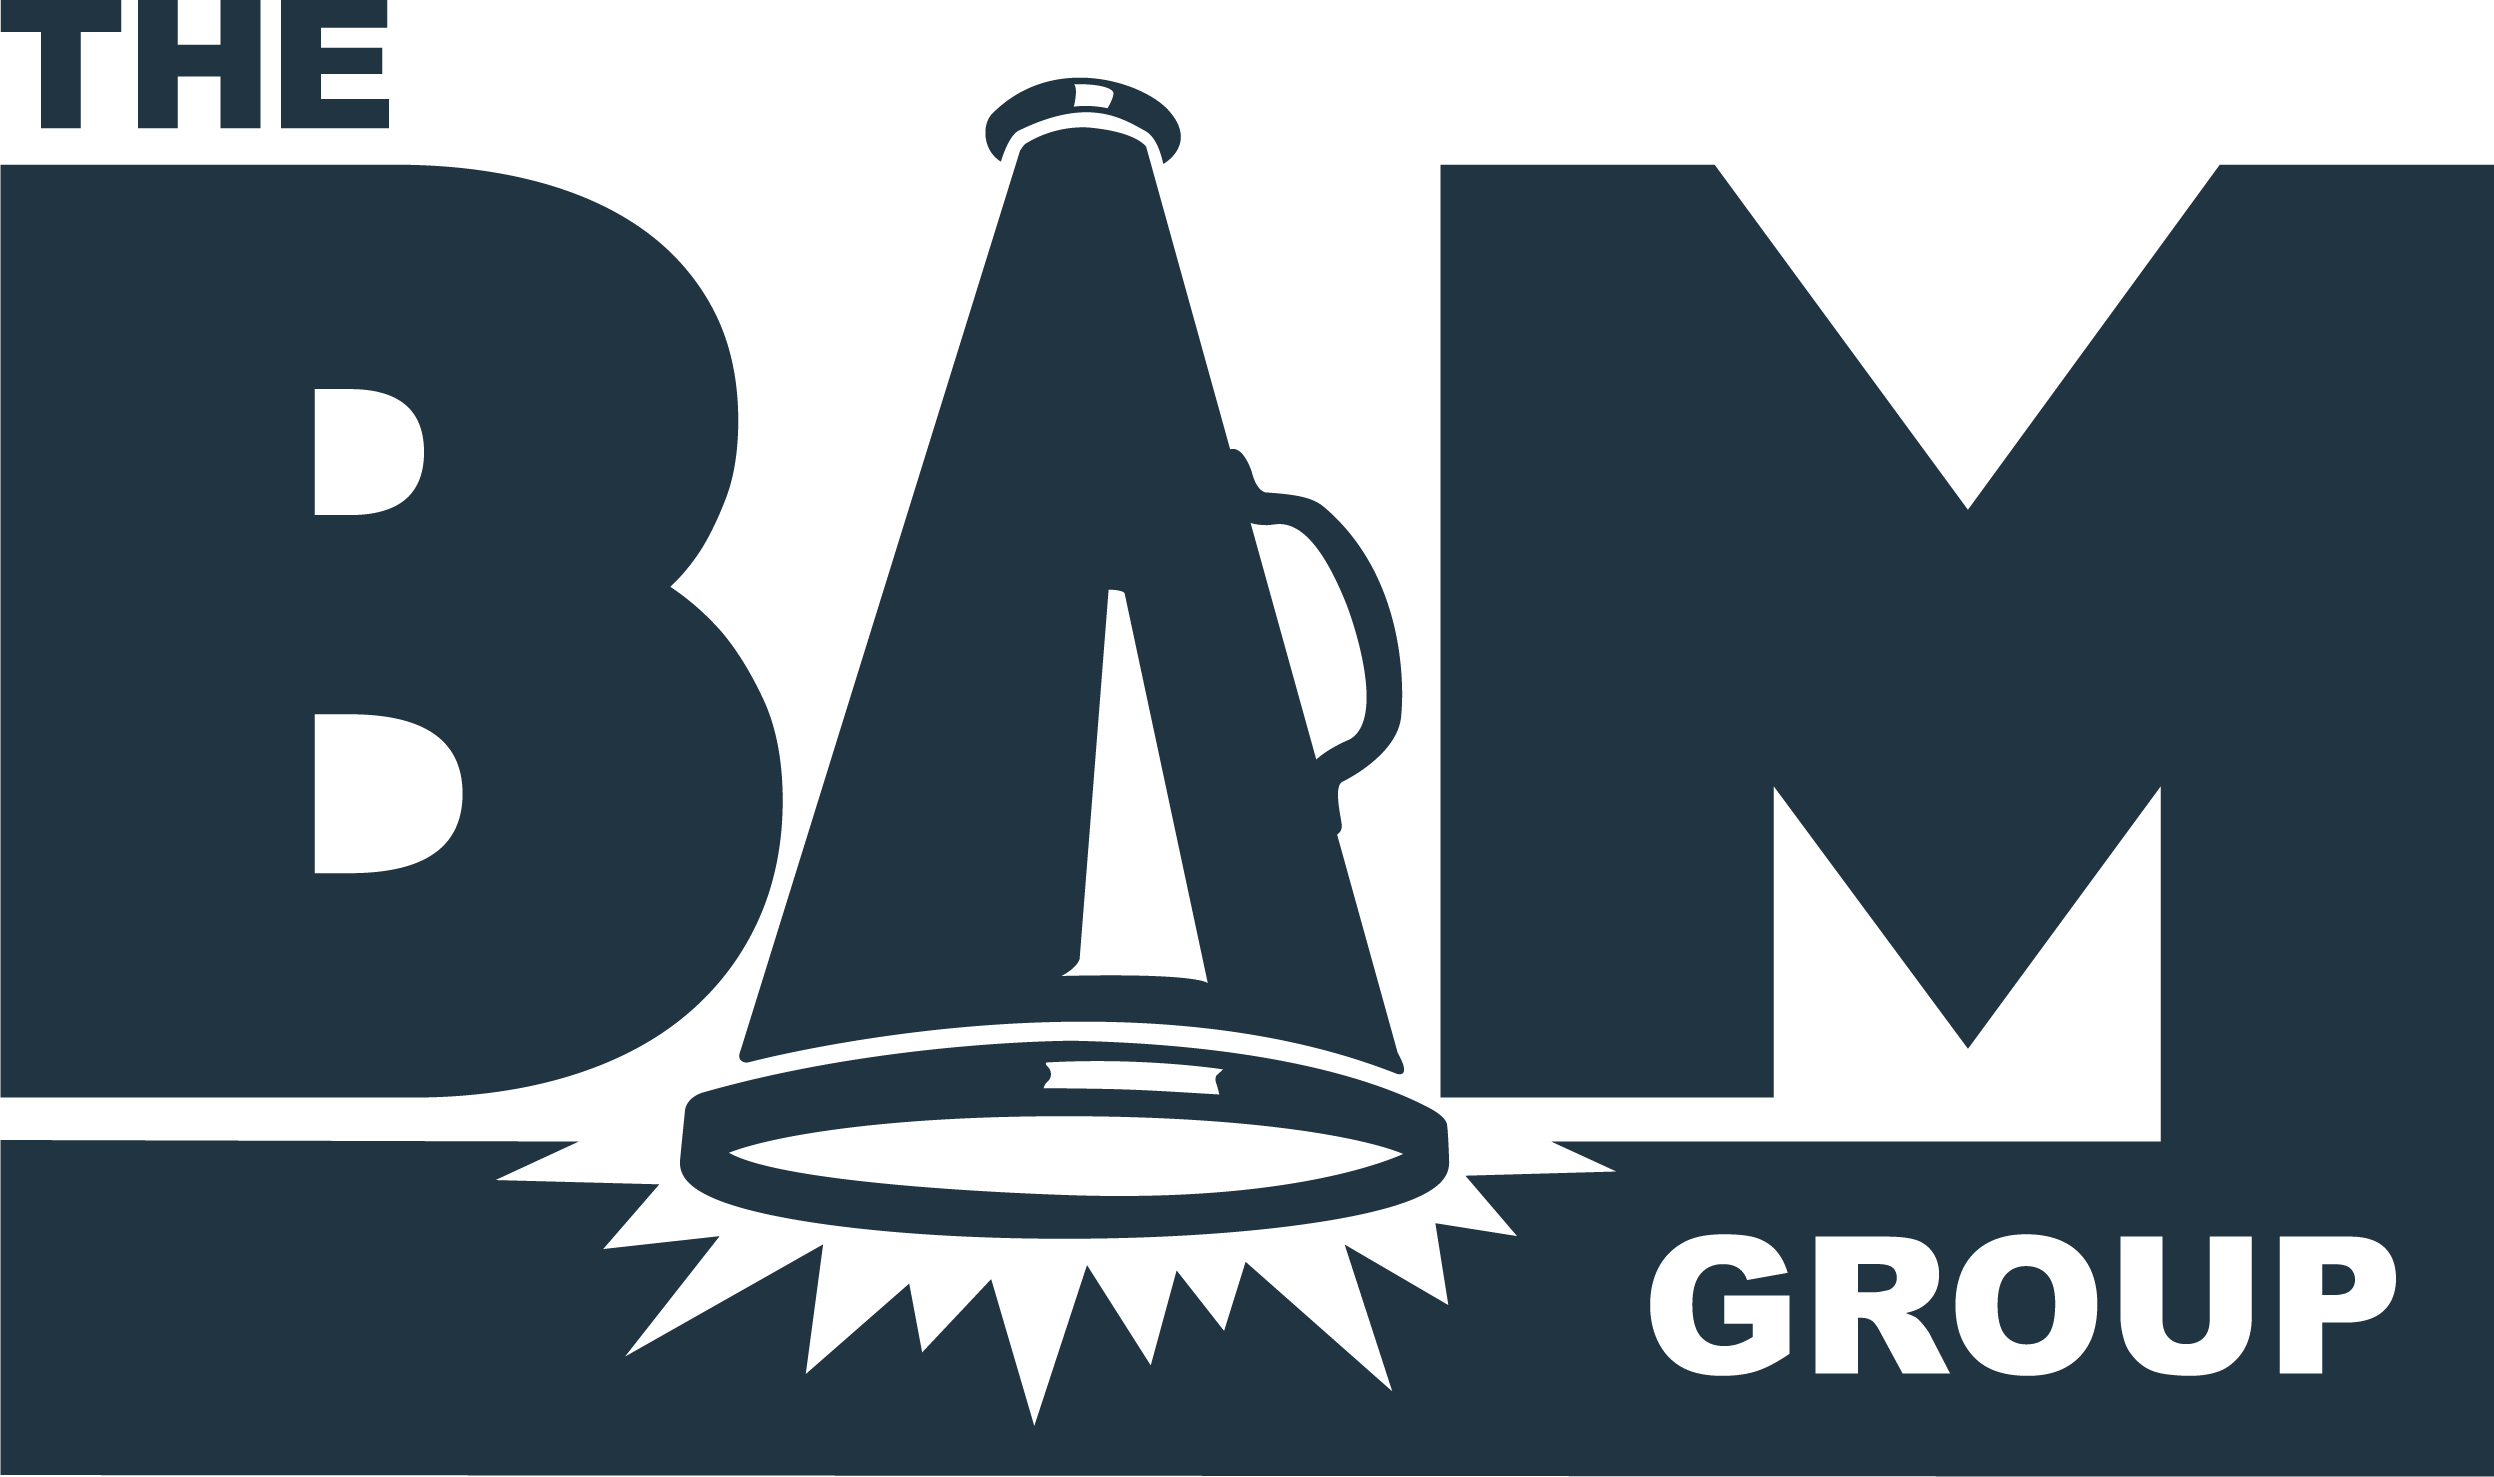 BAM GROUP LOGO-BLUE.png